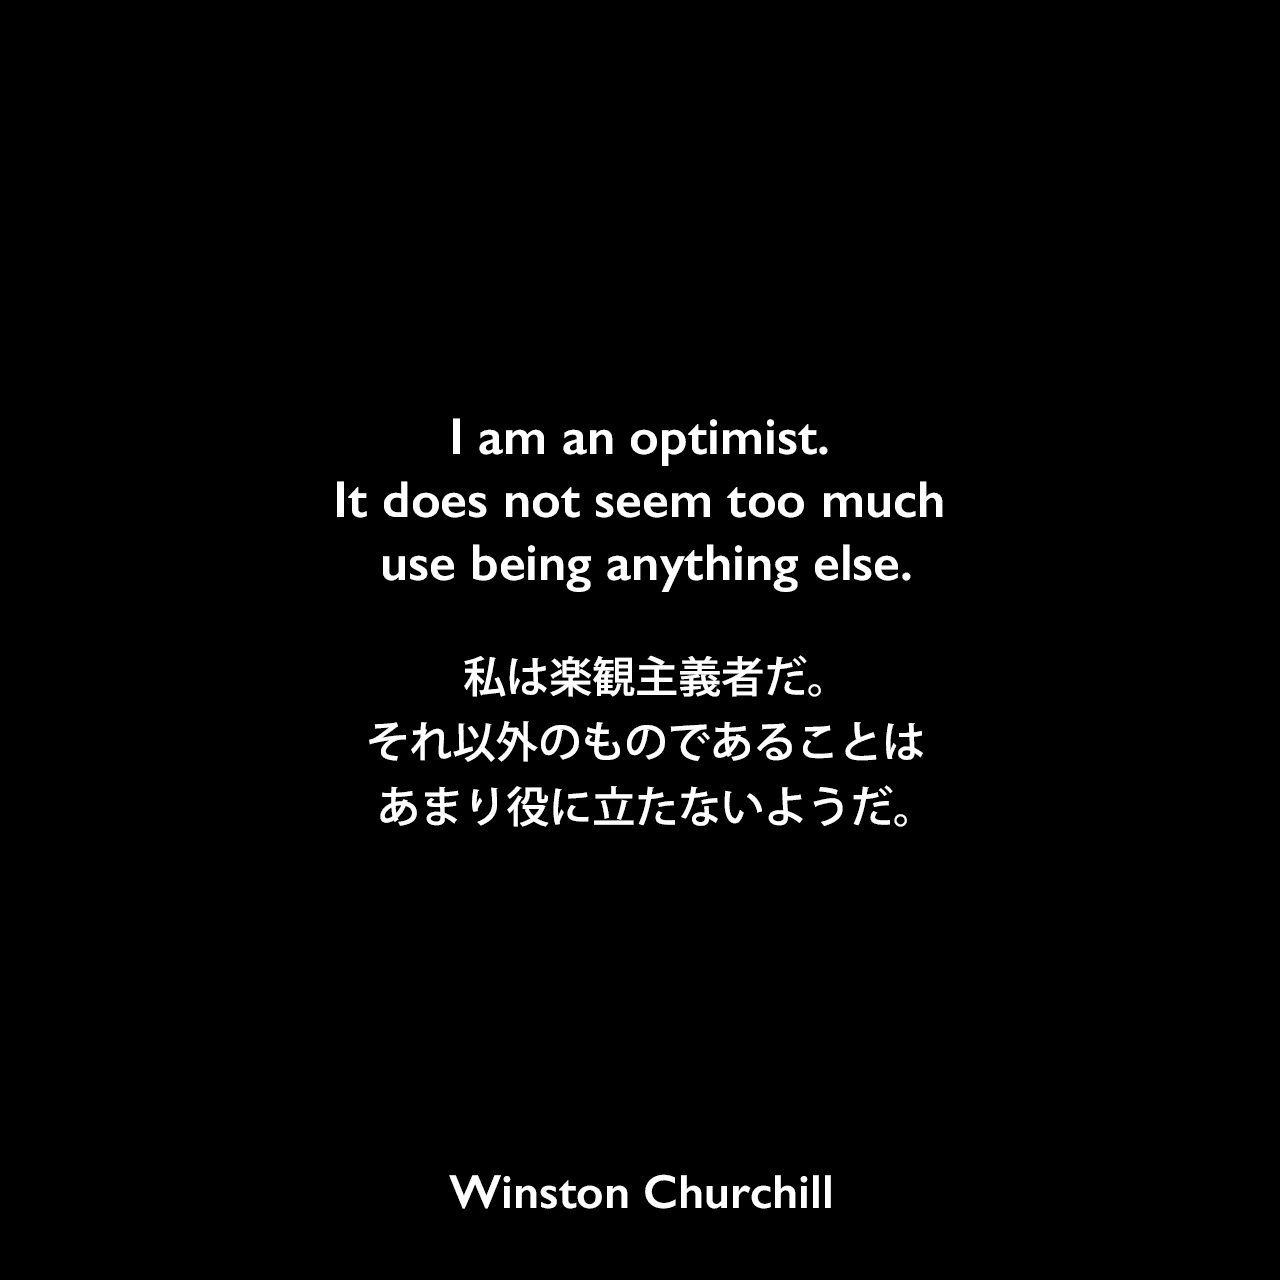 I am an optimist. It does not seem too much use being anything else.私は楽観主義者だ。それ以外のものであることは、あまり役に立たないようだ。Winston Churchill